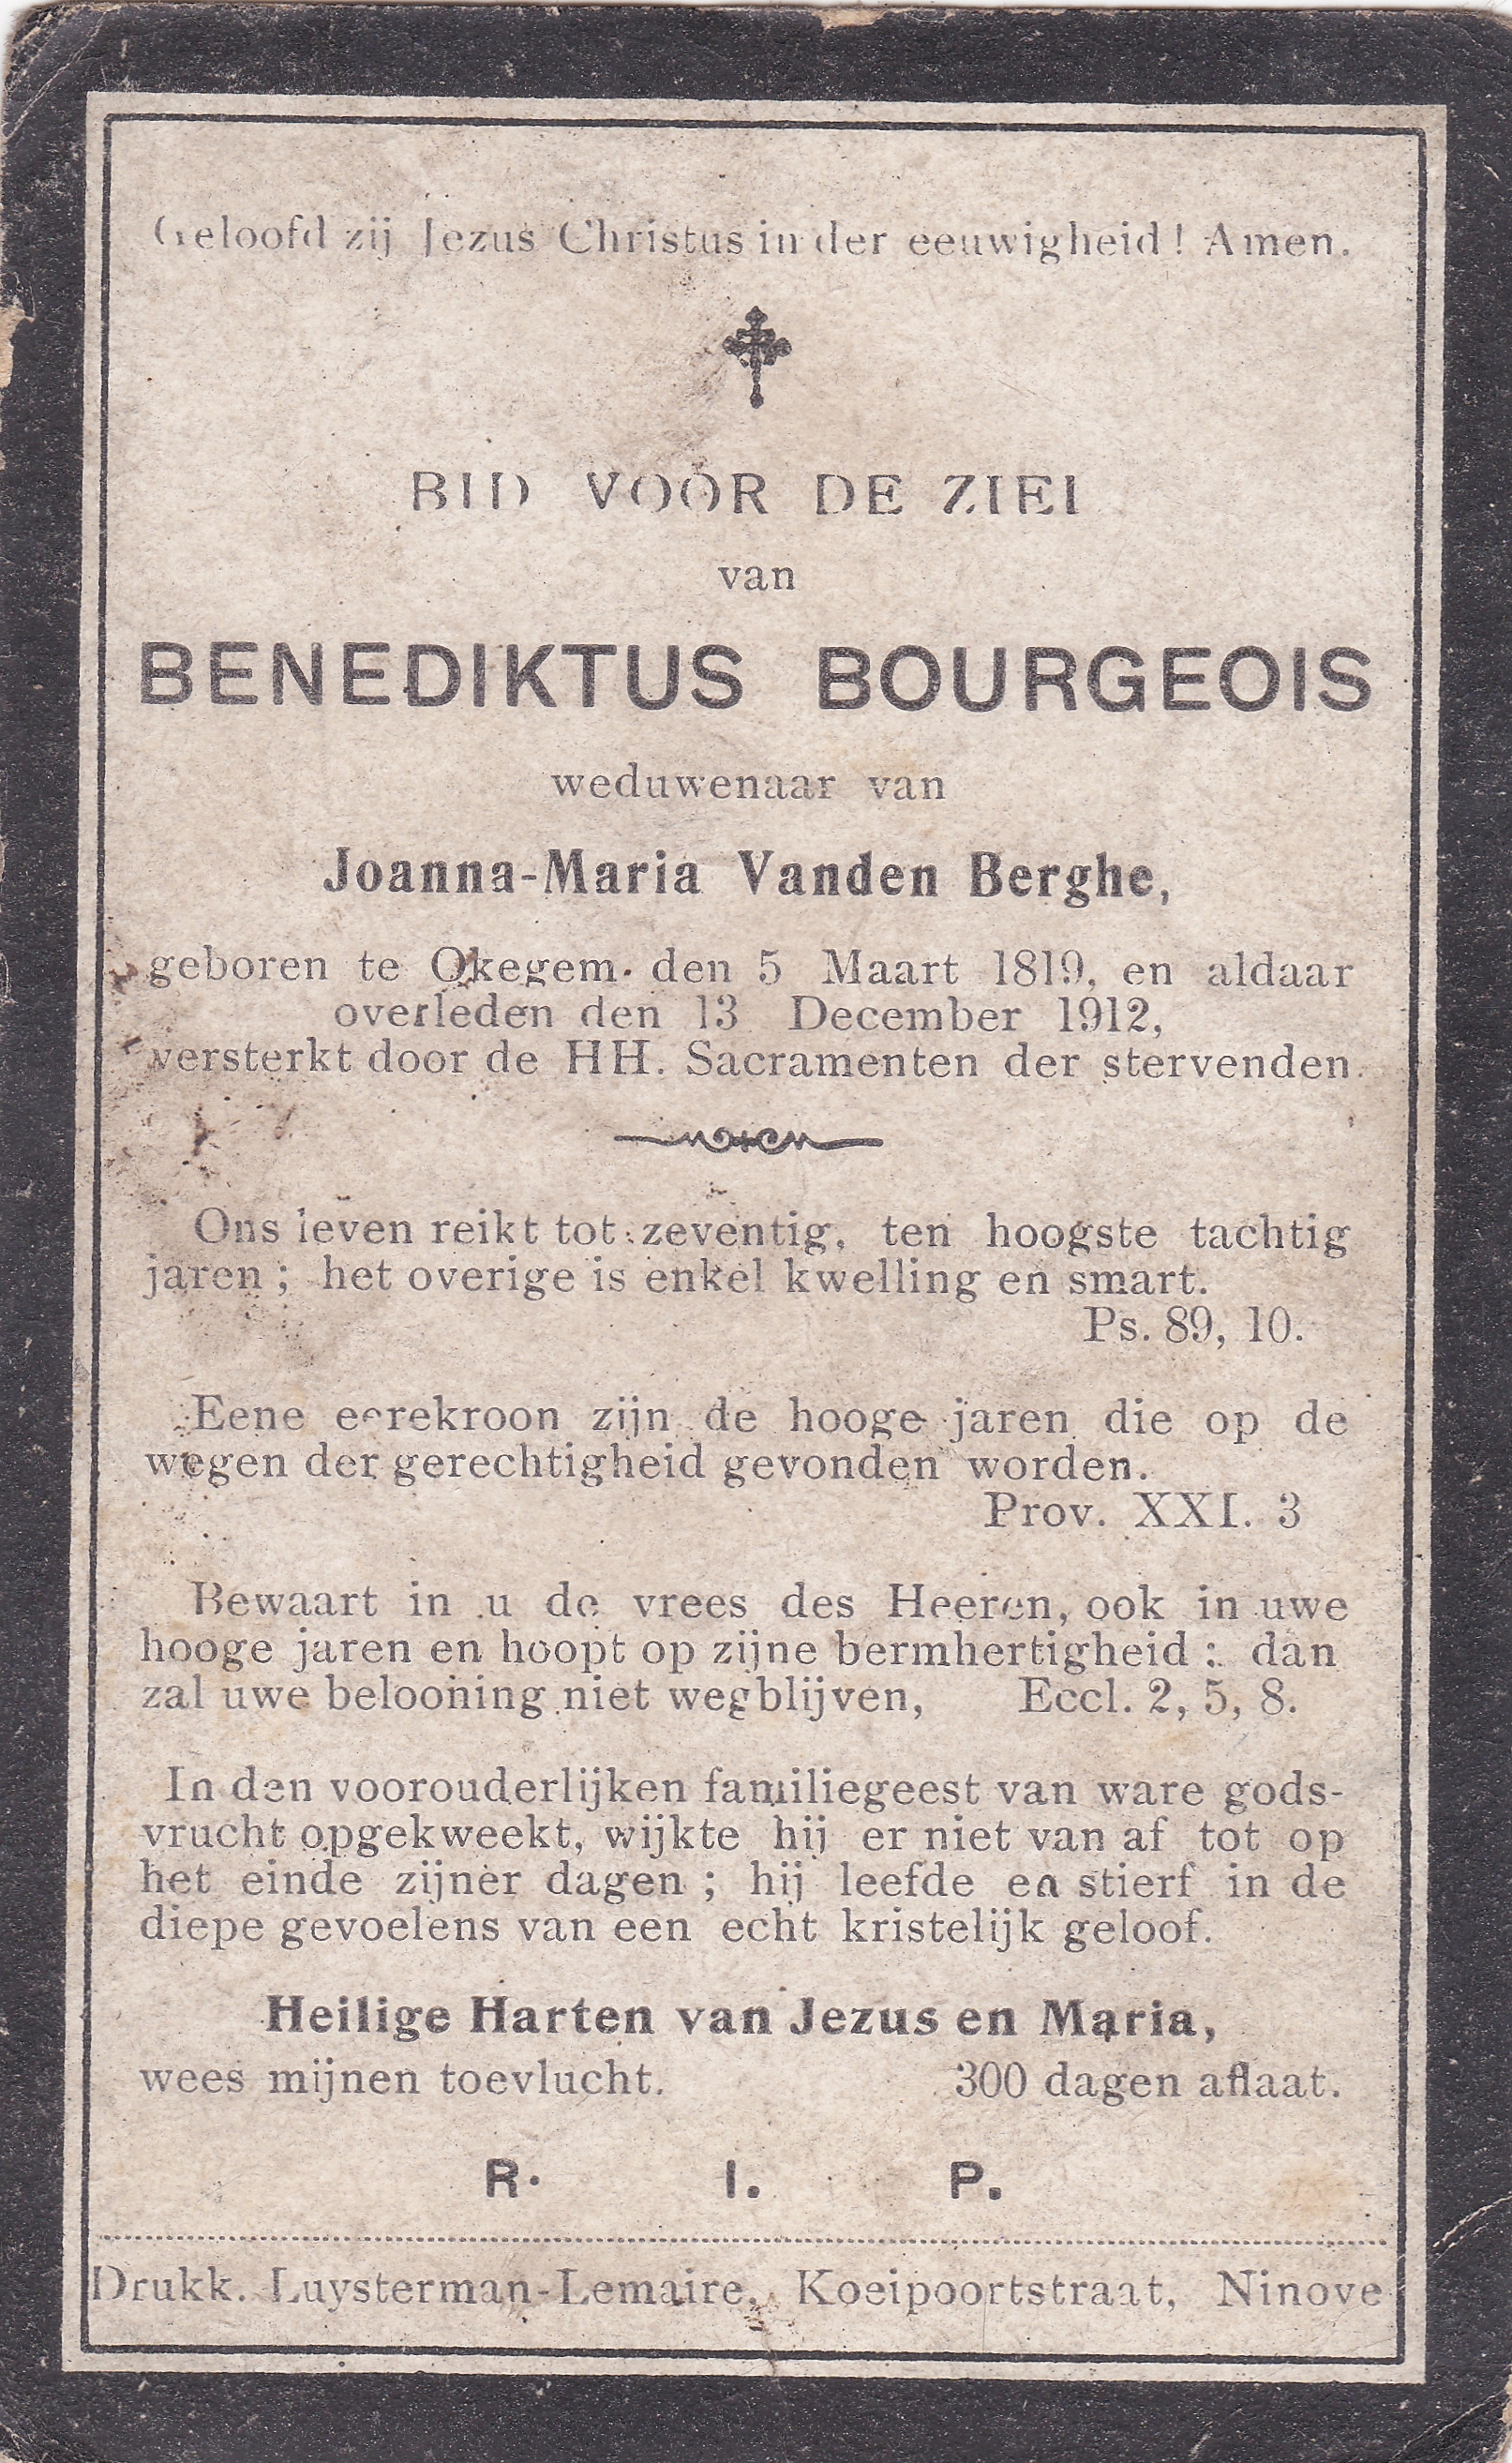 Bourgeois Benediktus